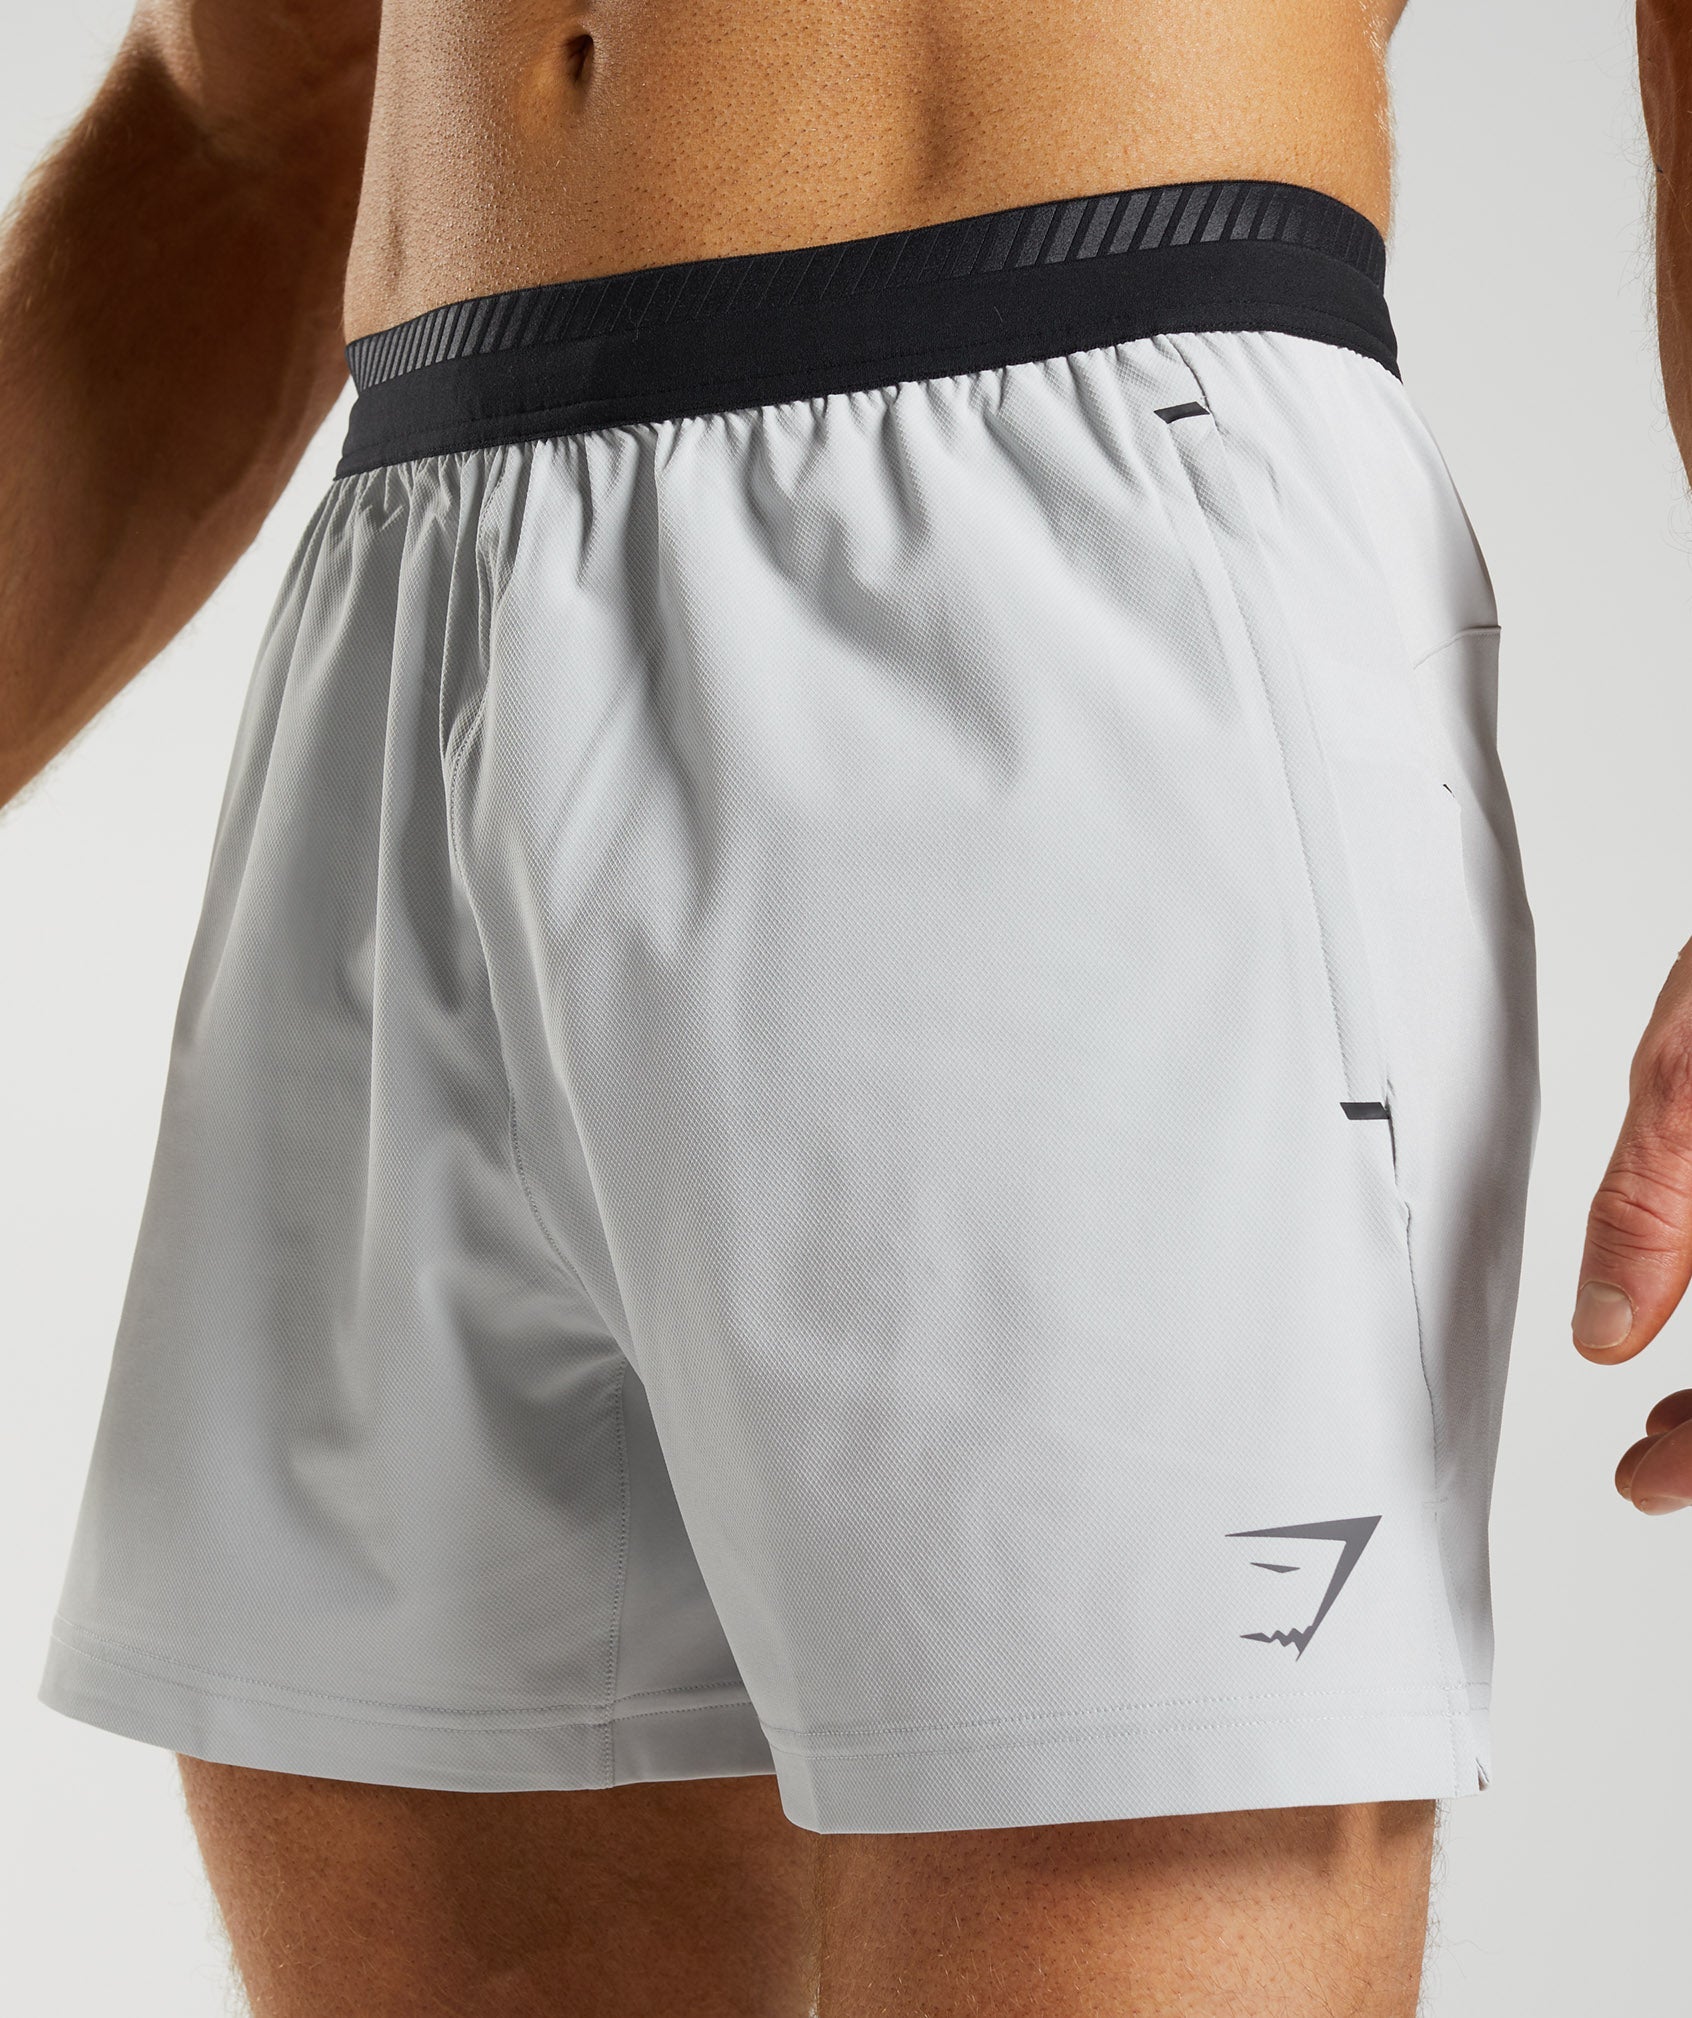 Apex 5" Hybrid Shorts in Light Grey